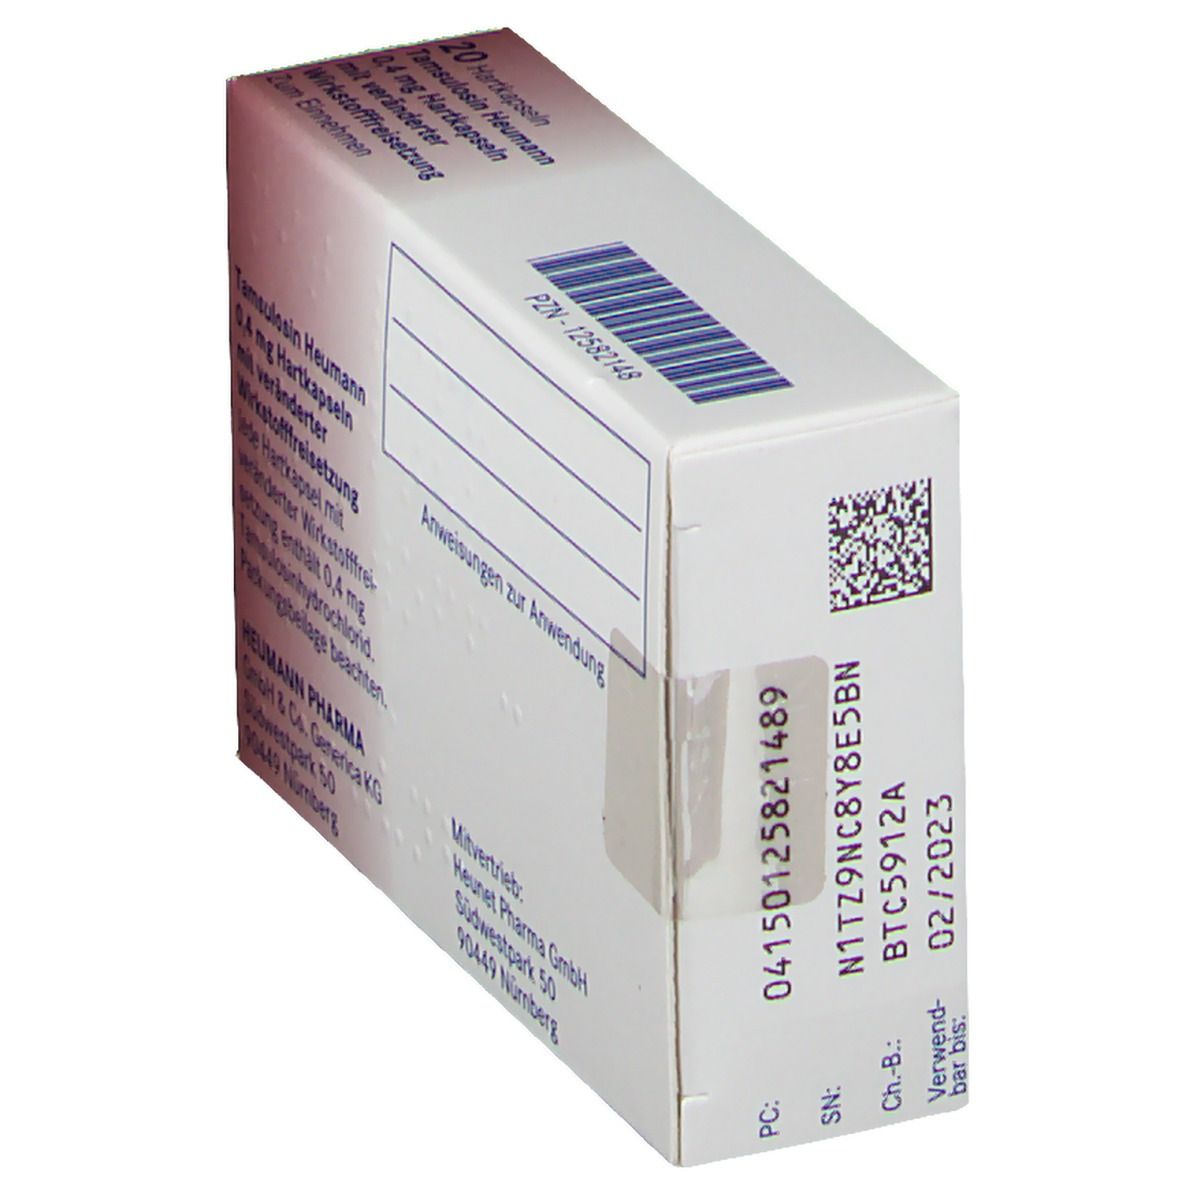 Tamsulosin Heumann 0,4 mg